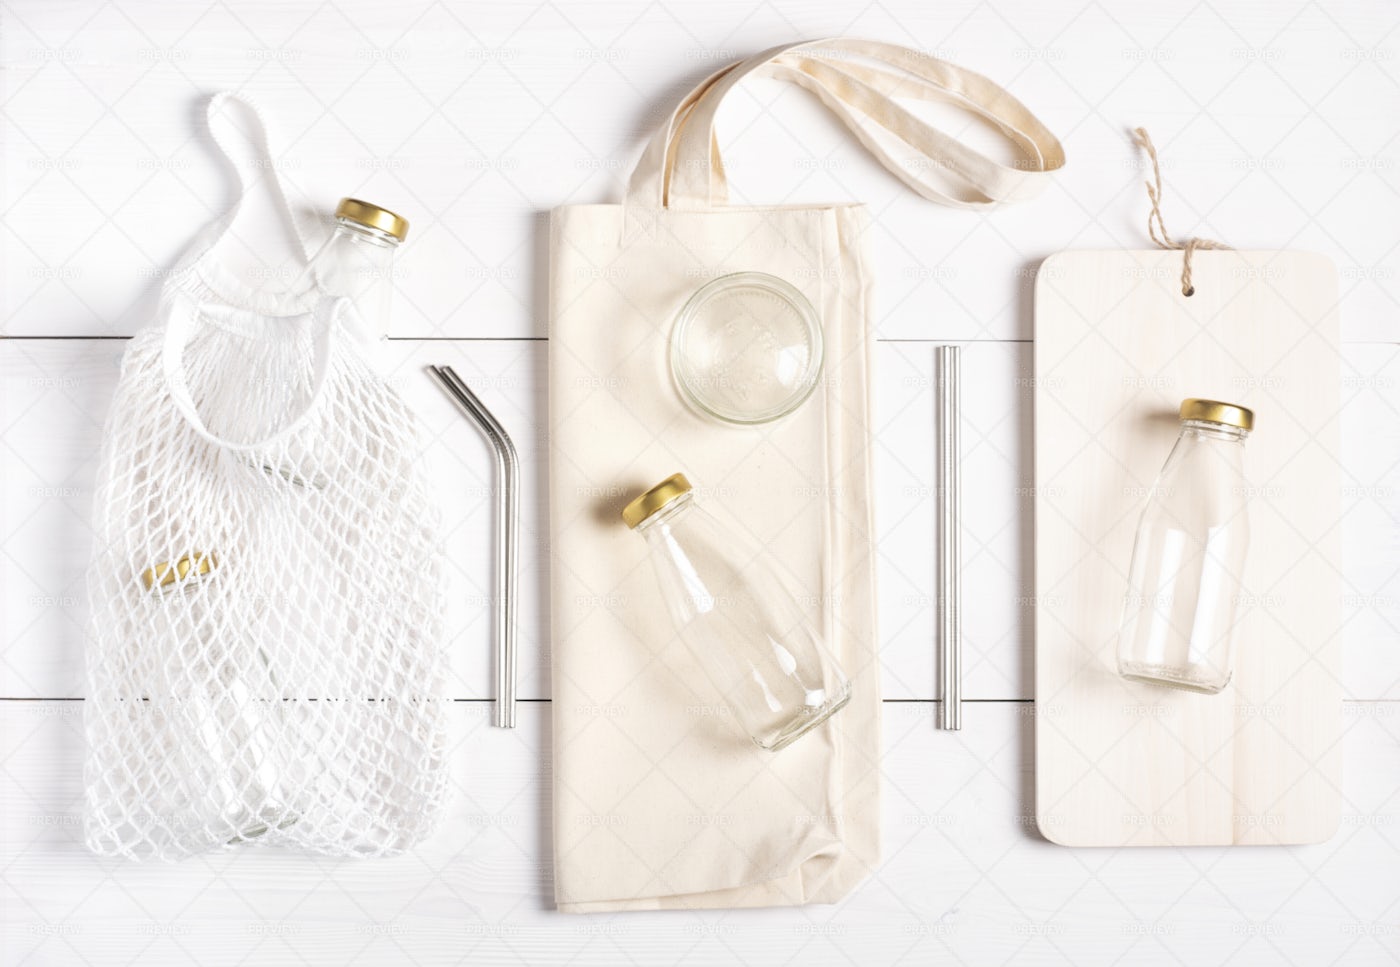 Reusable Bags And Glass Bottles: Stock Photos